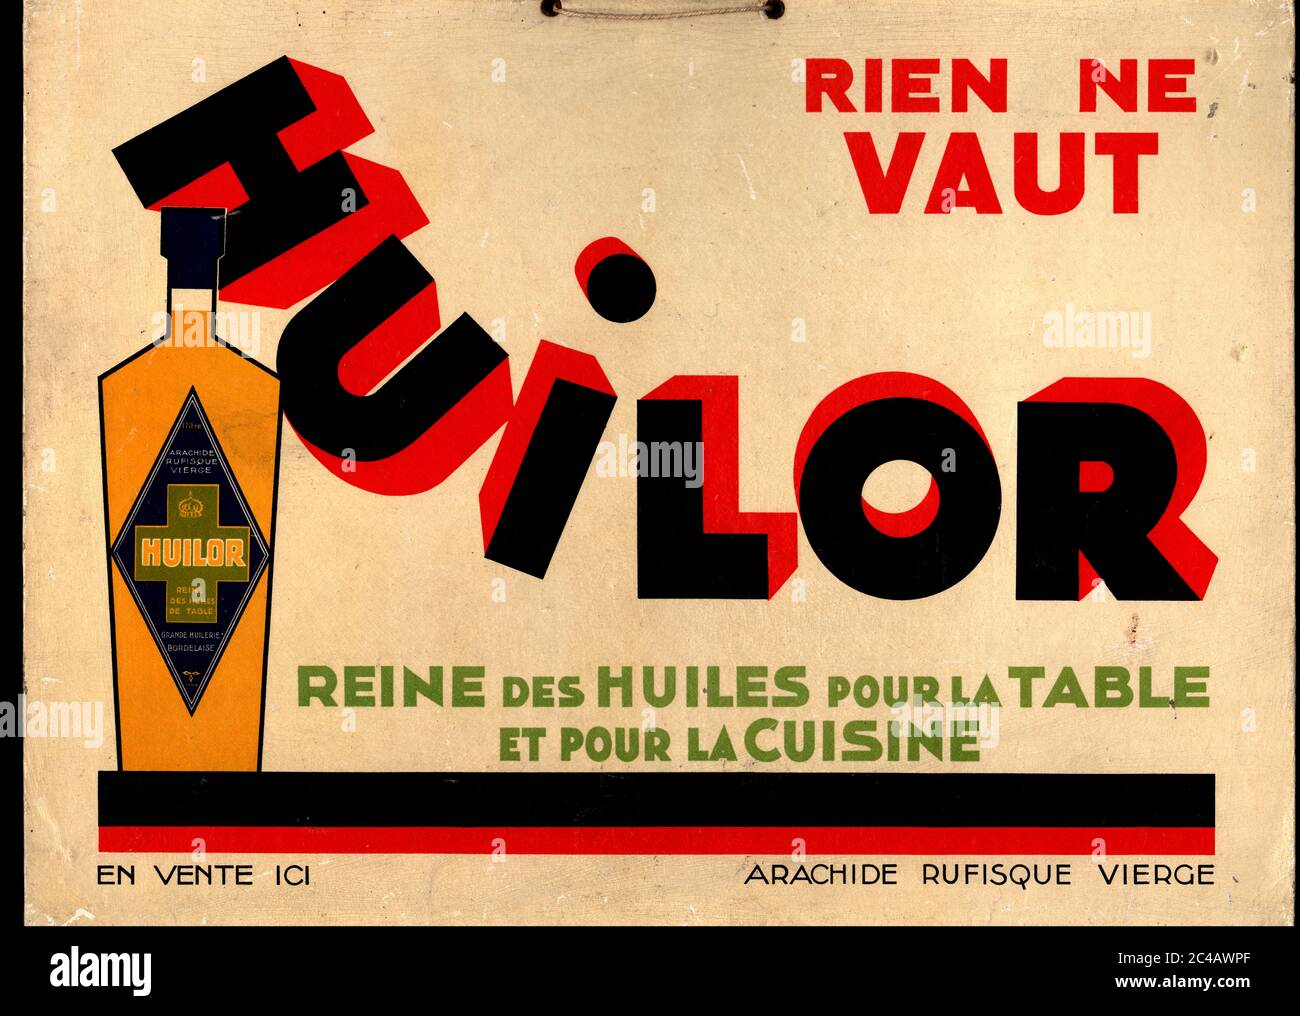 Carton PLV huile Huilor vers 1940 / oil Huilor around 1940 Stock Photo